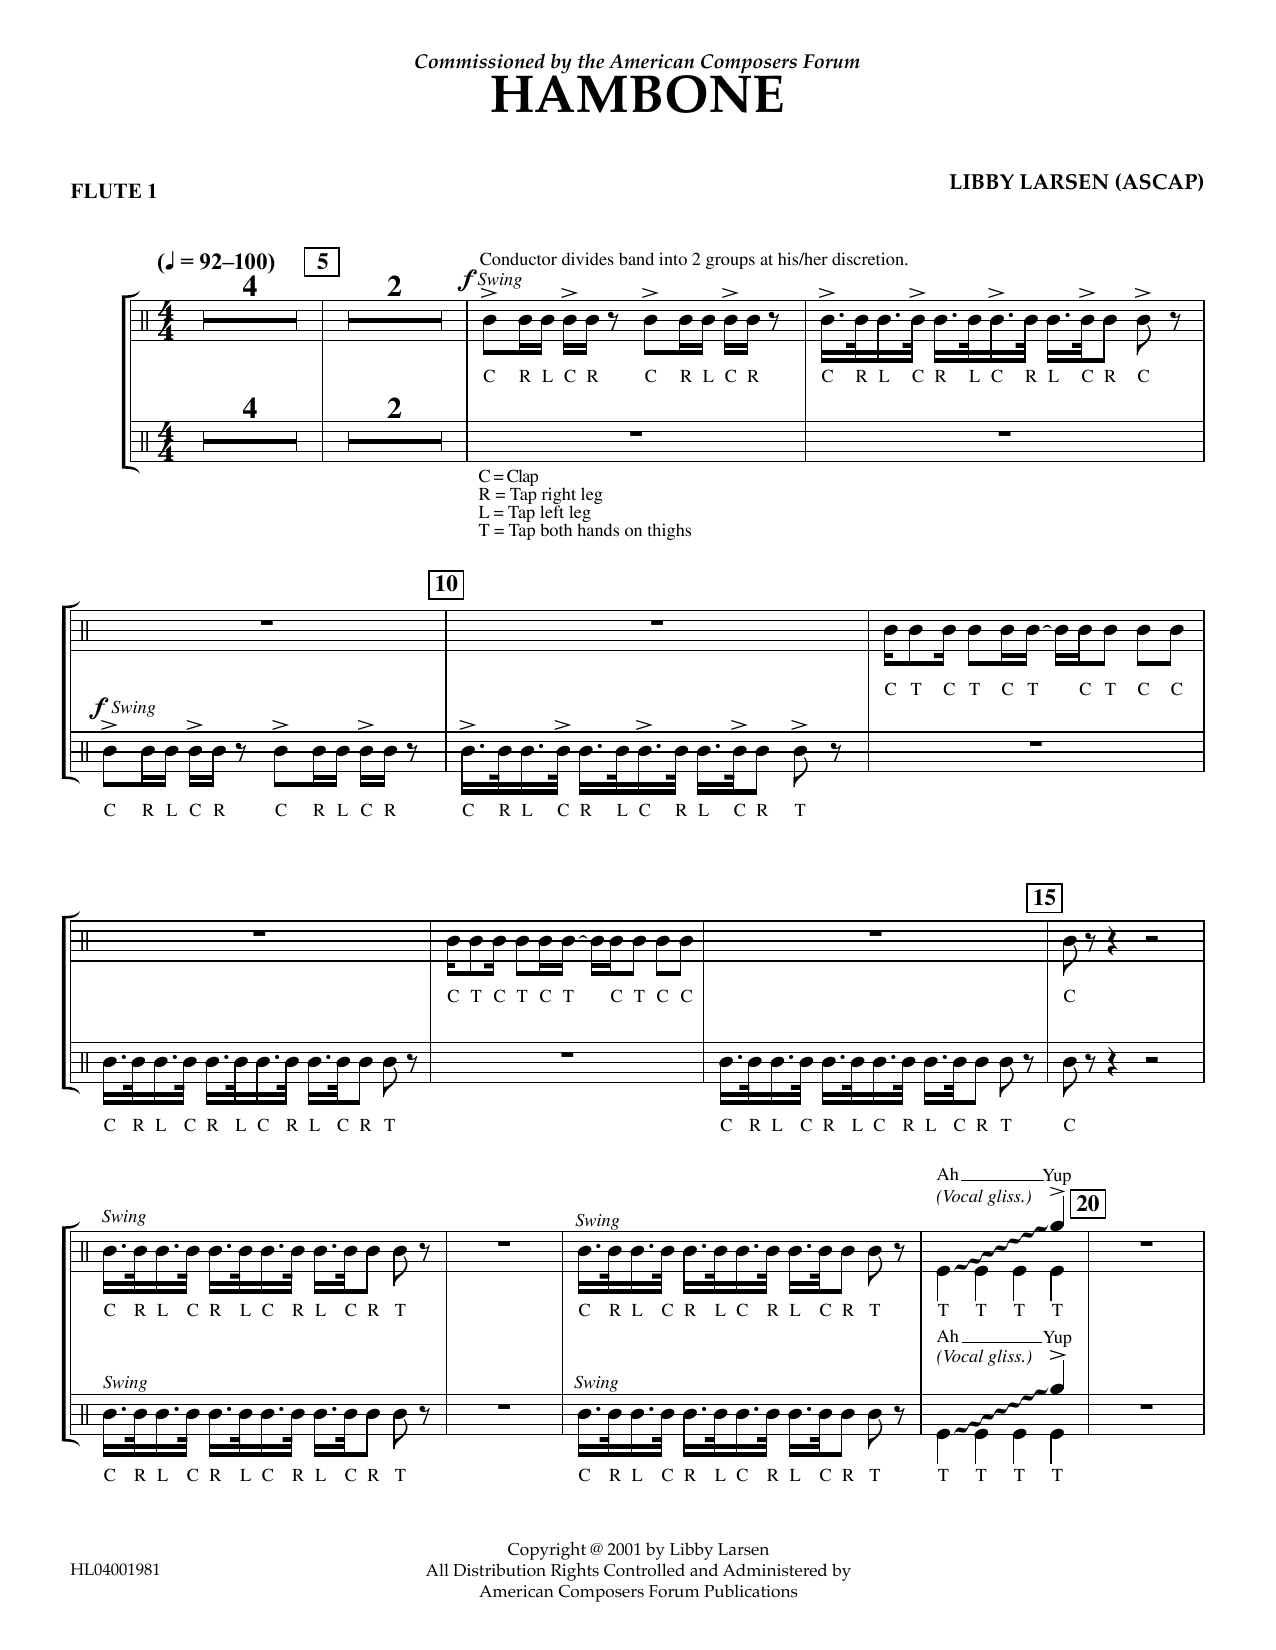 Download Libby Larsen Hambone - Flute Sheet Music